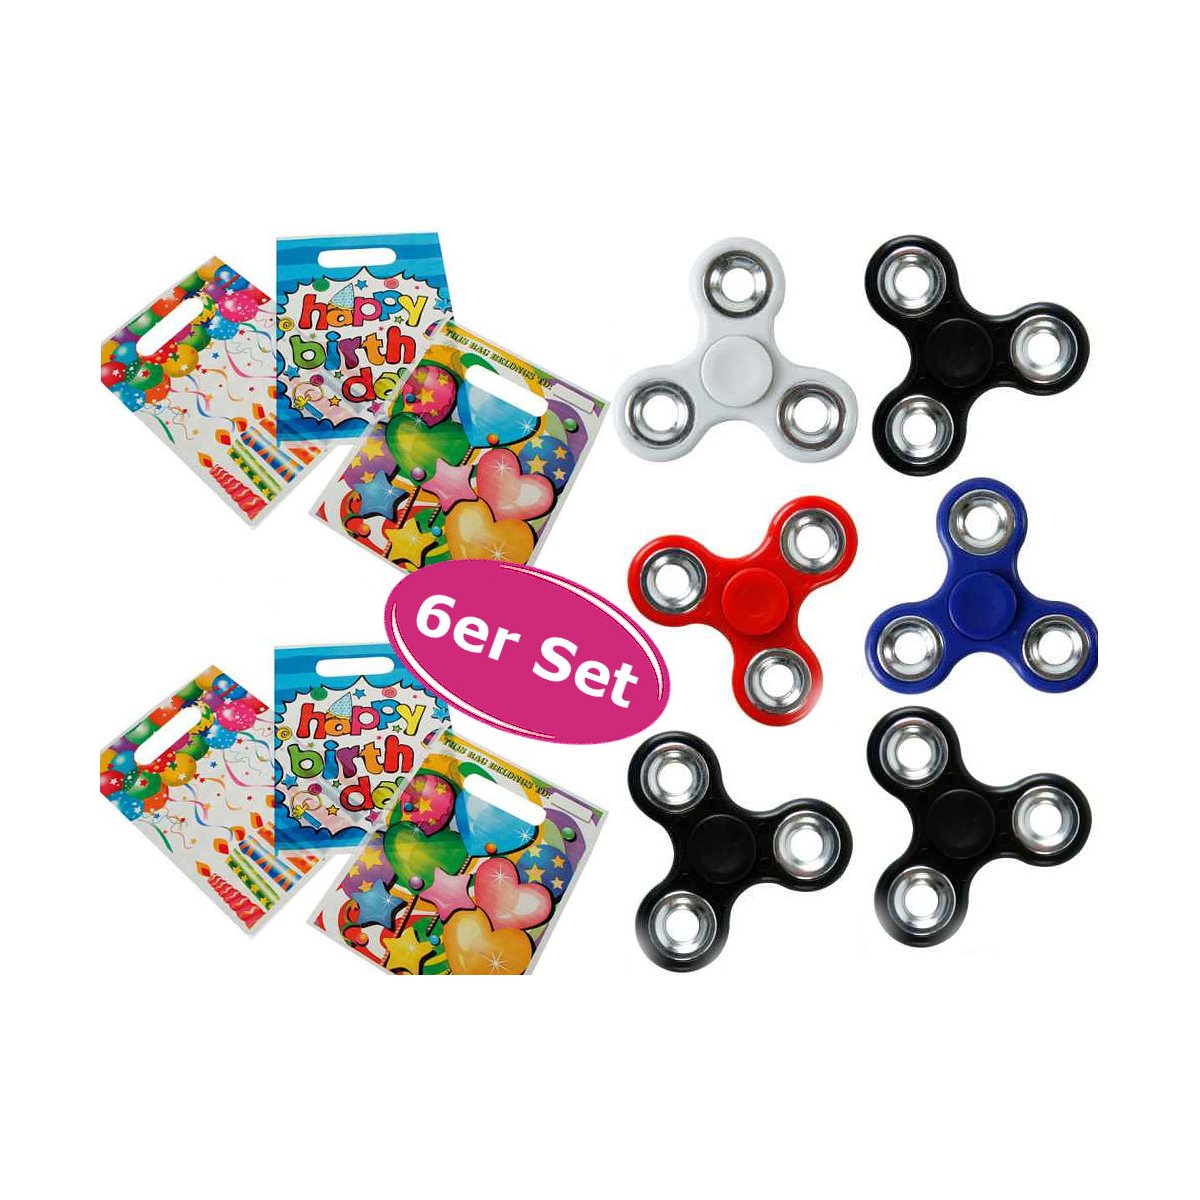 6x Smiley Kreisel Mitgebsel Kinder Geburtstag Mitbringsel Spinnig Spielzeug Emoj 